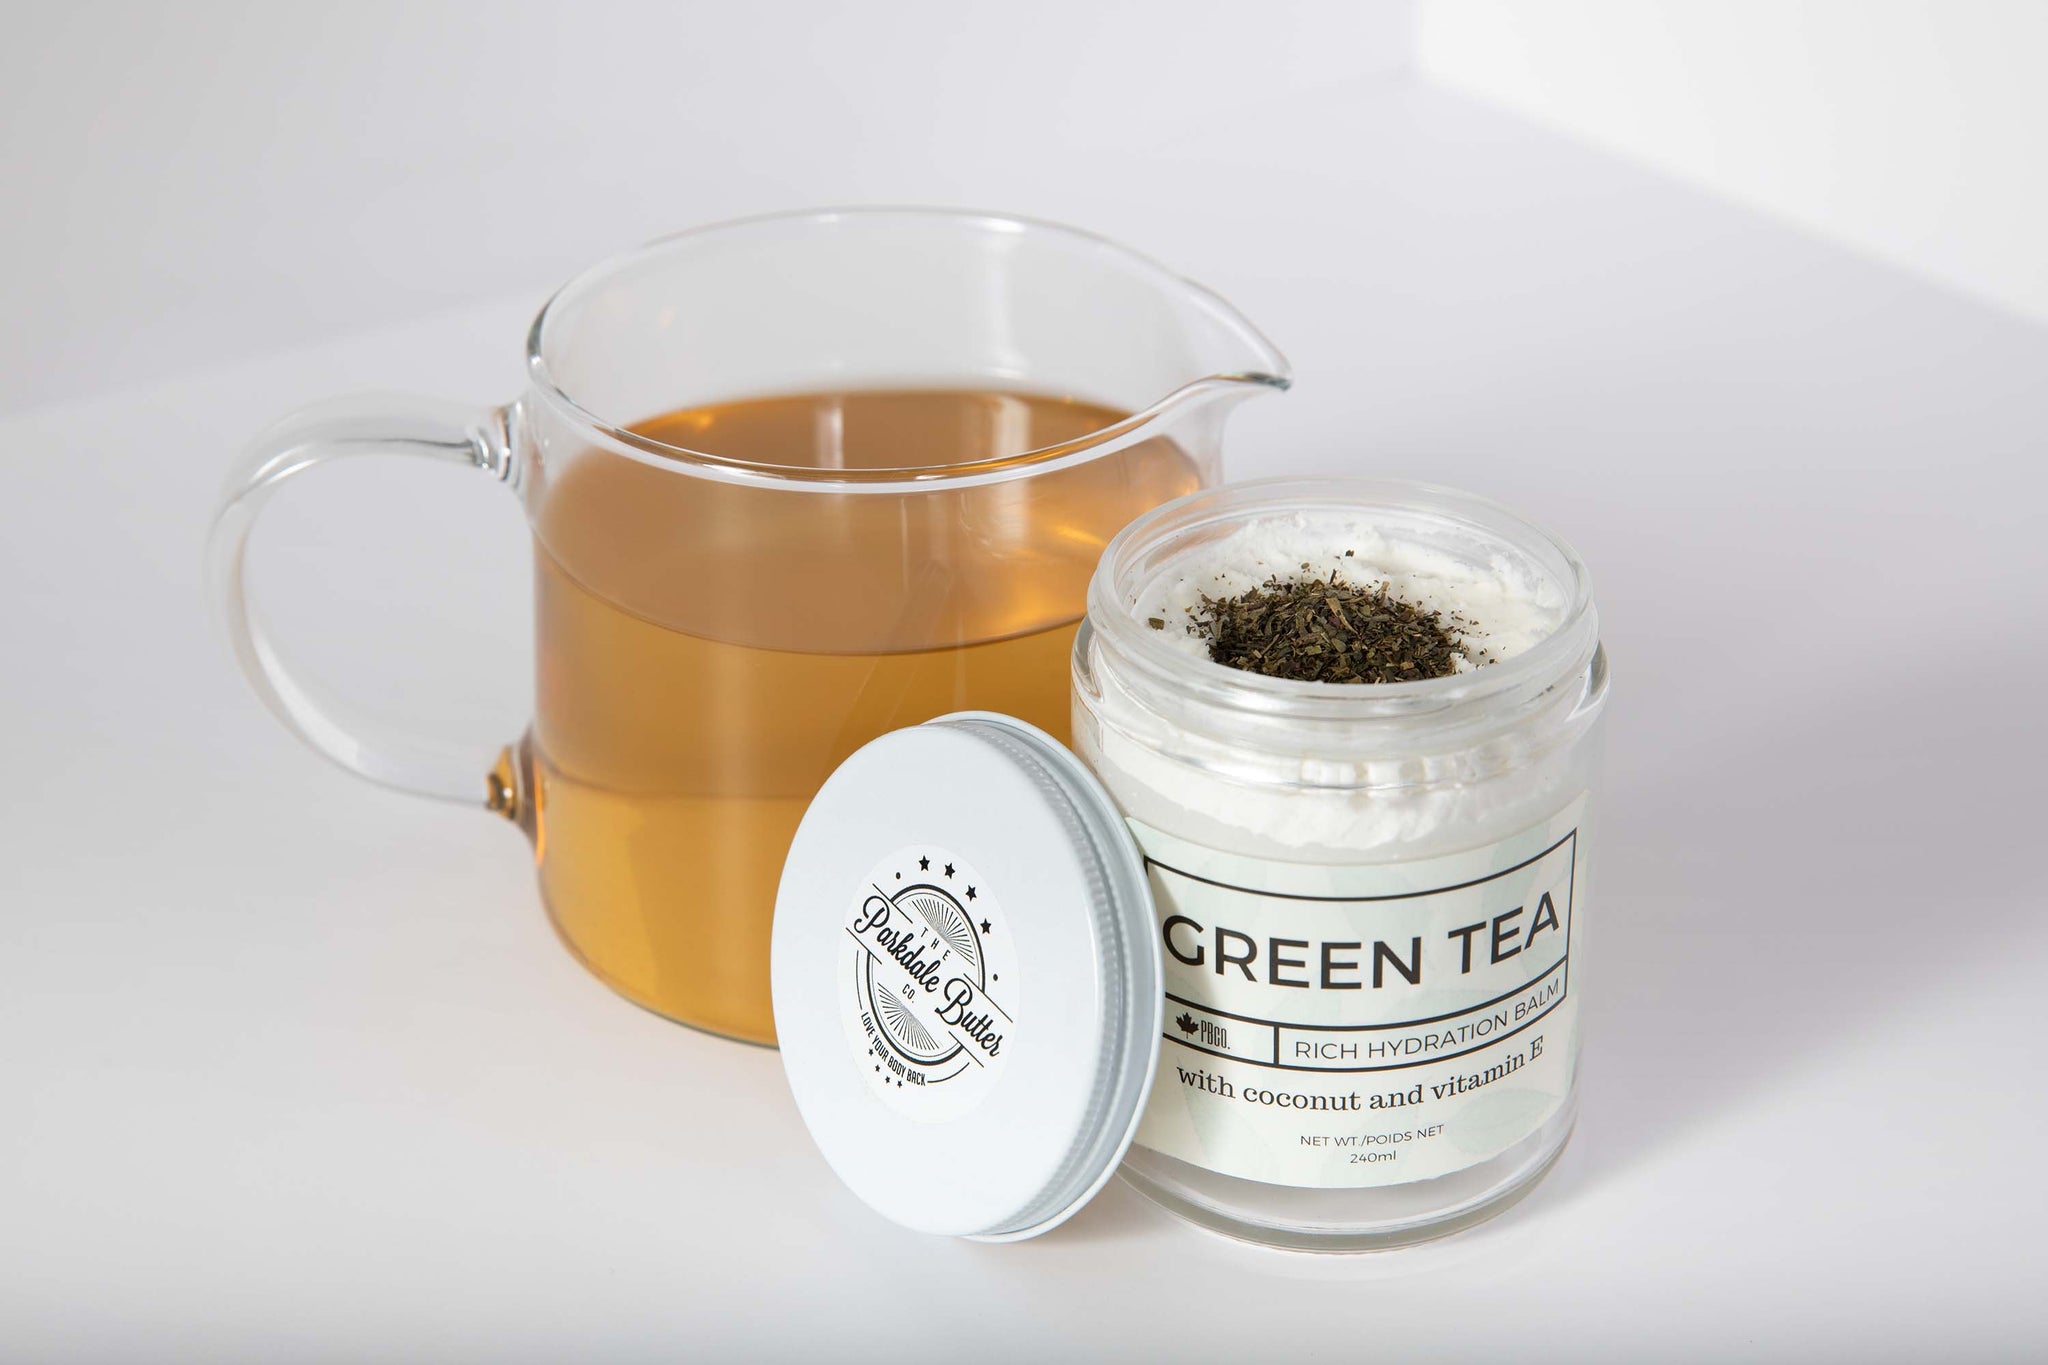 Green Tea Rich Hydration Balm